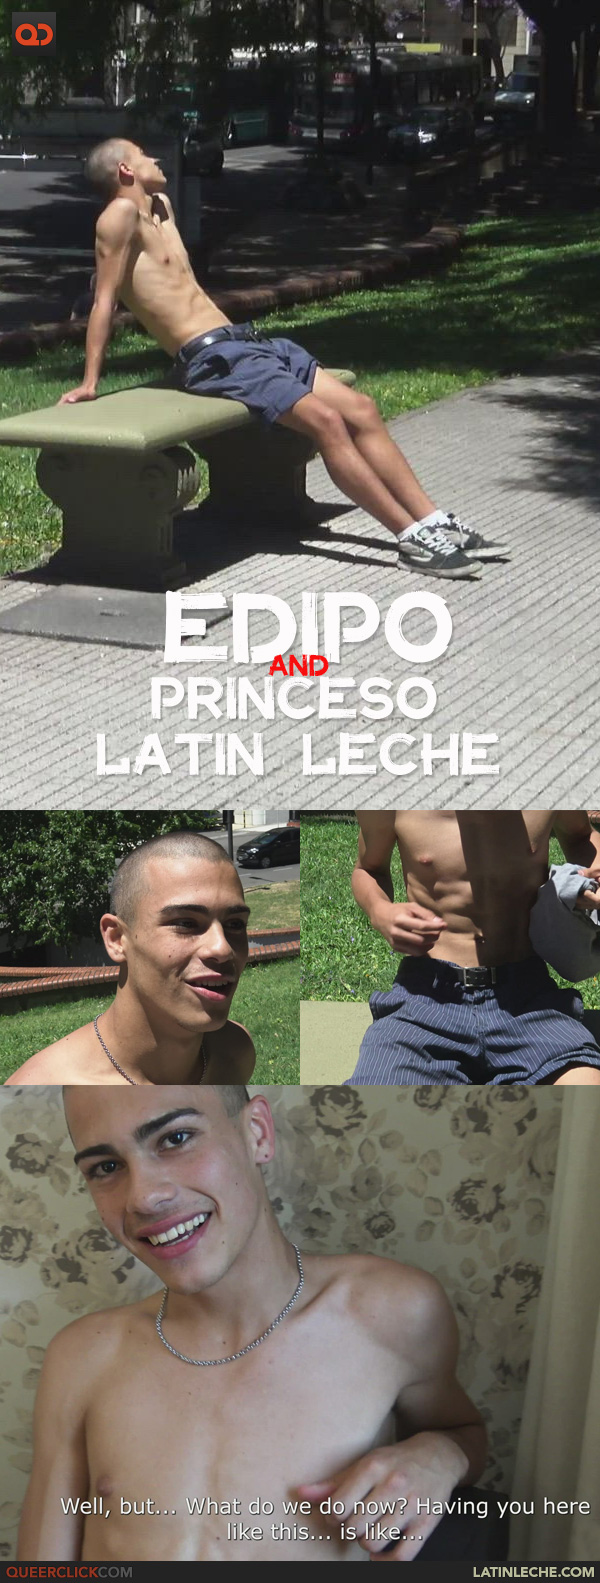 Say Uncle | Latin Leche: Edipo and Princeso